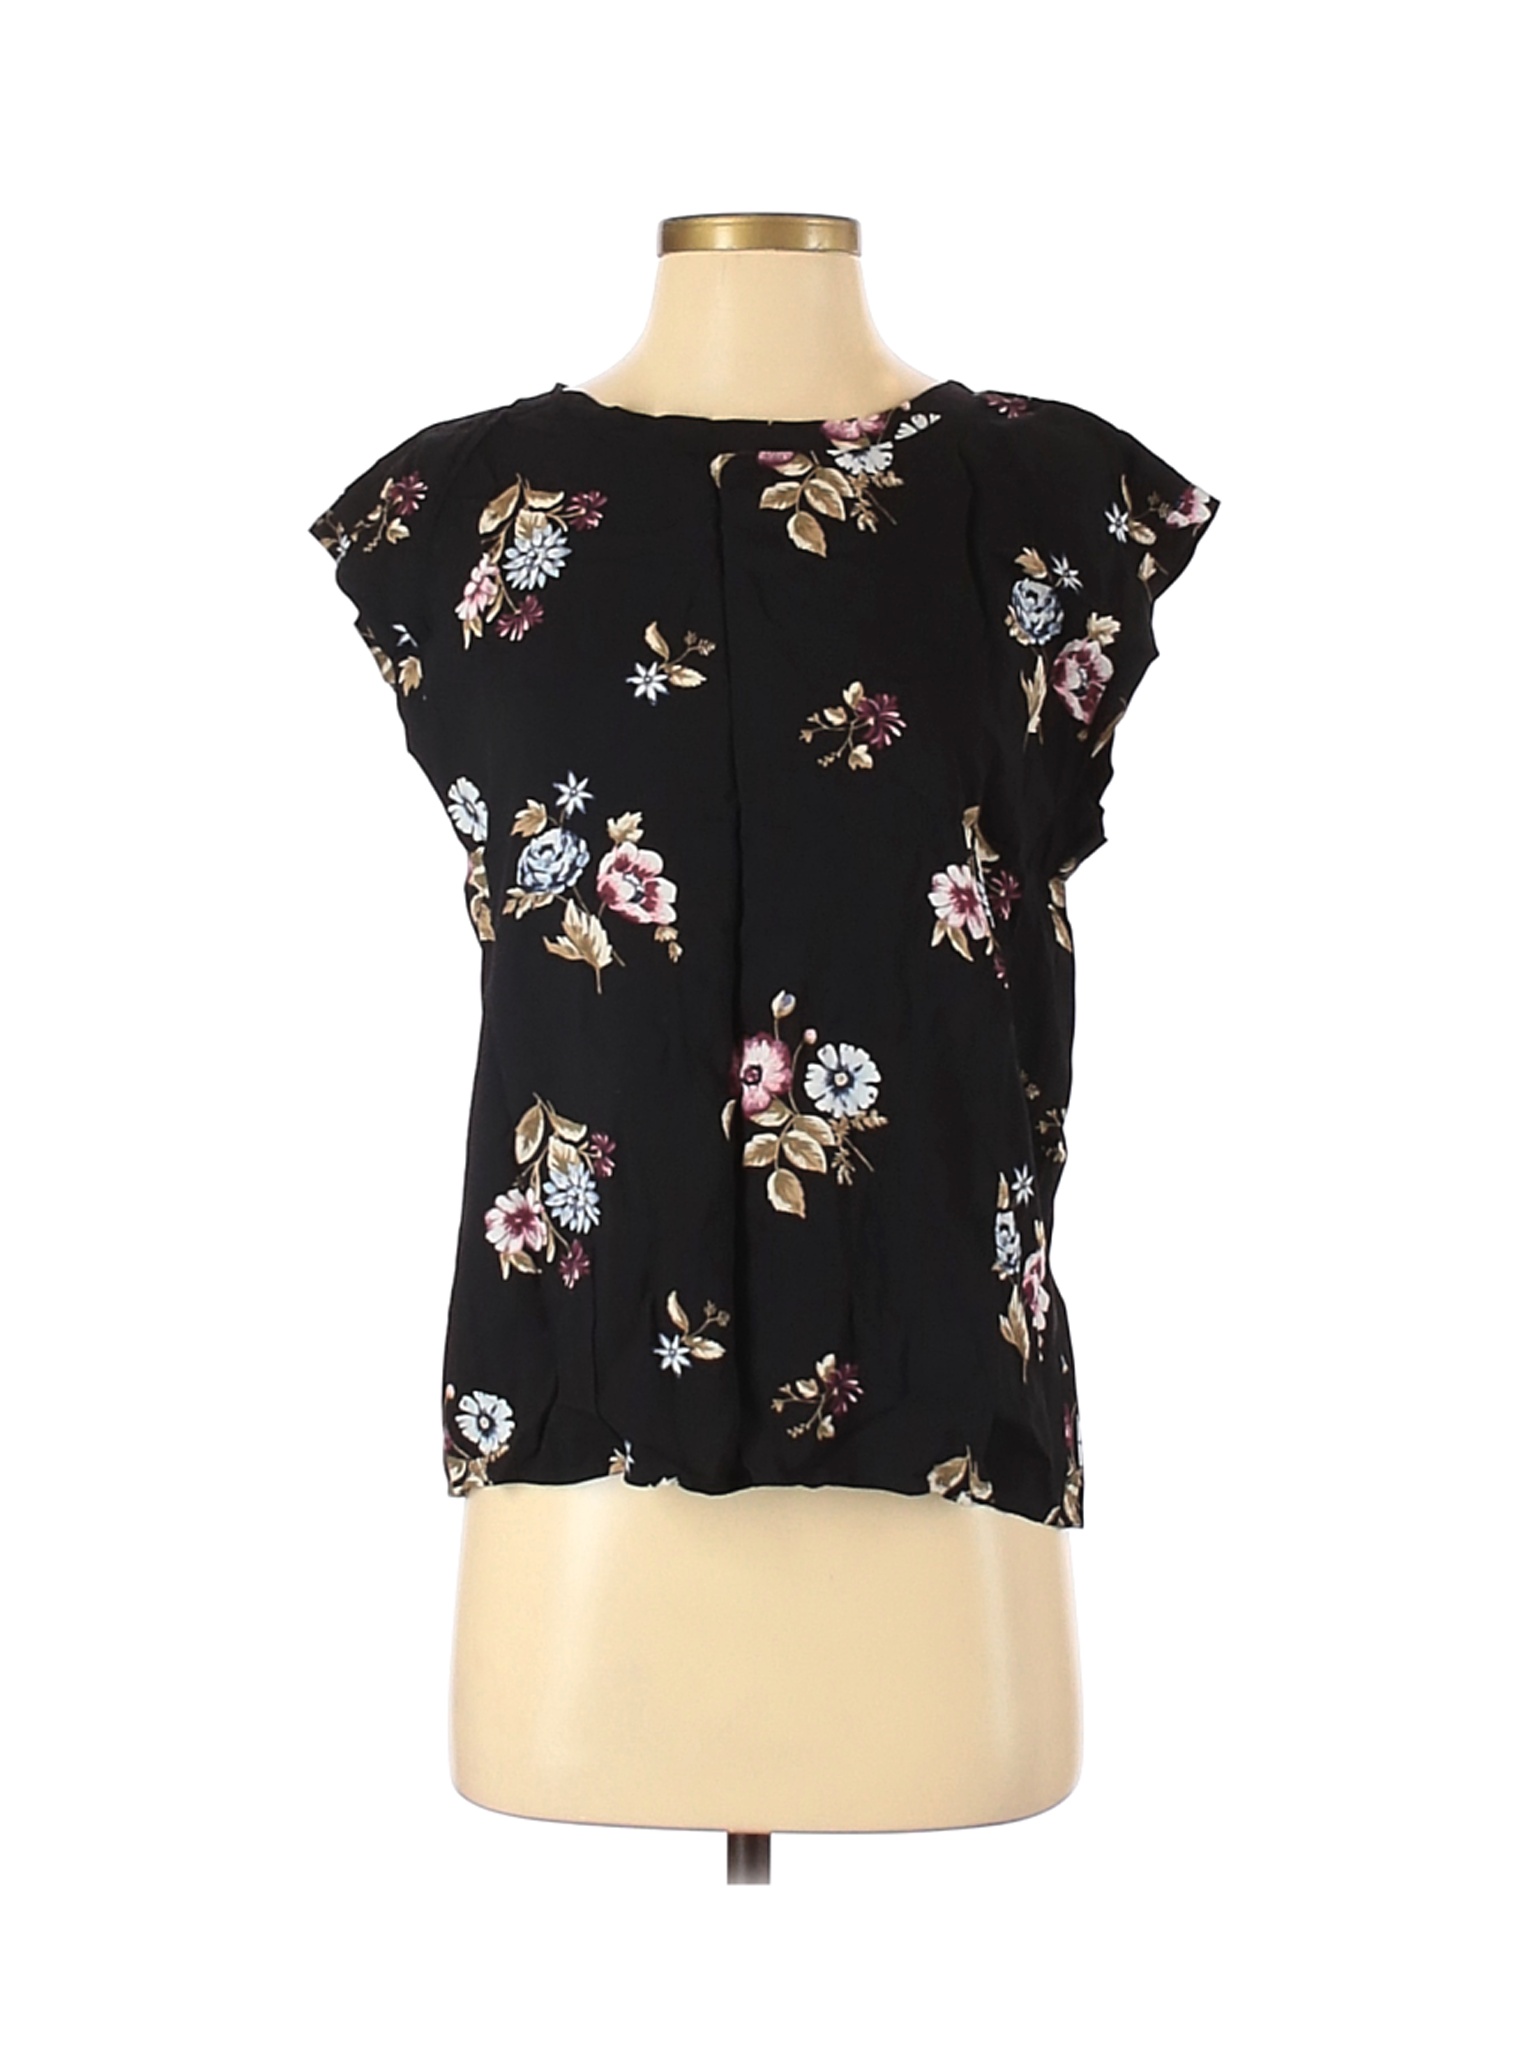 Abercrombie & Fitch Women Black Short Sleeve Blouse S | eBay